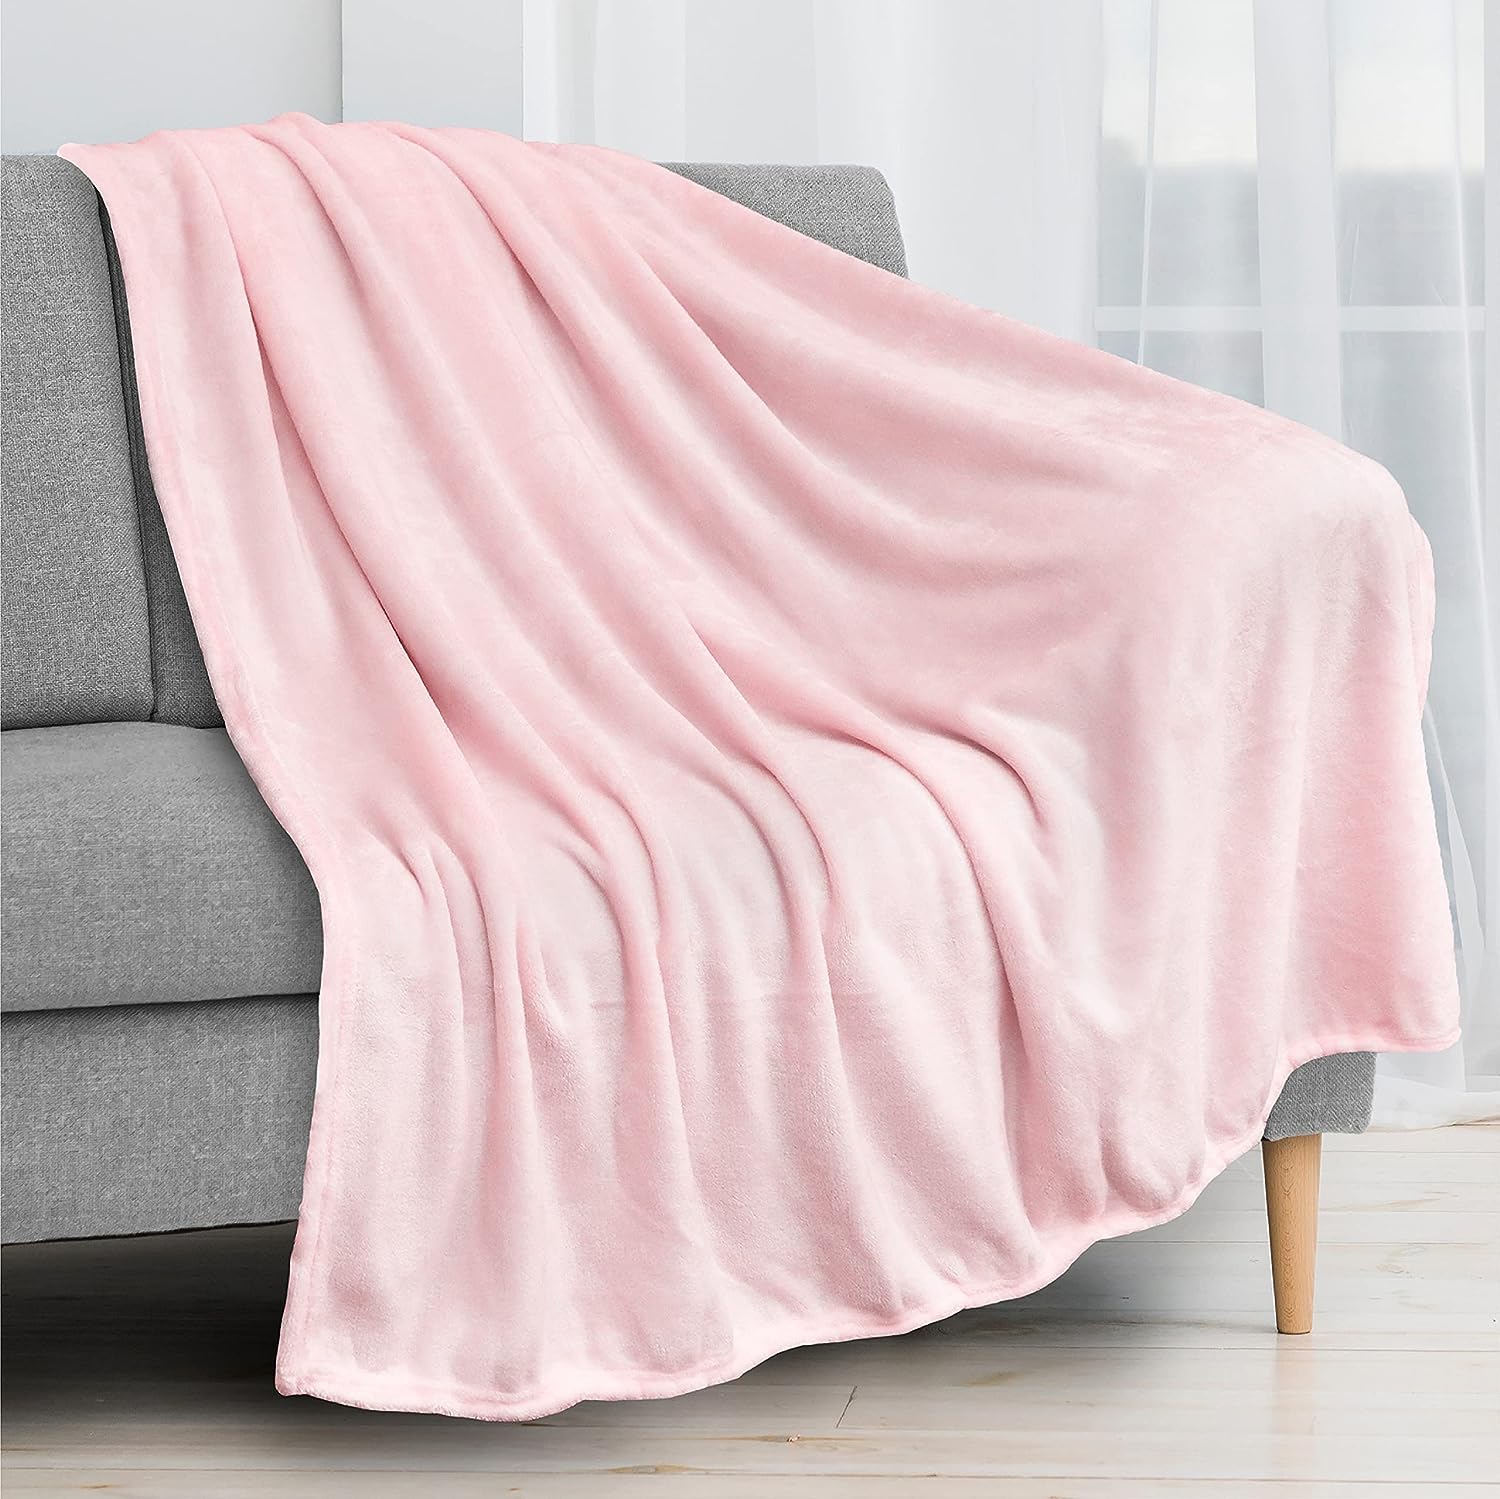 Kawahome King Flannel - Pink Fleece Luxury Blanket Super Soft Plush Solid